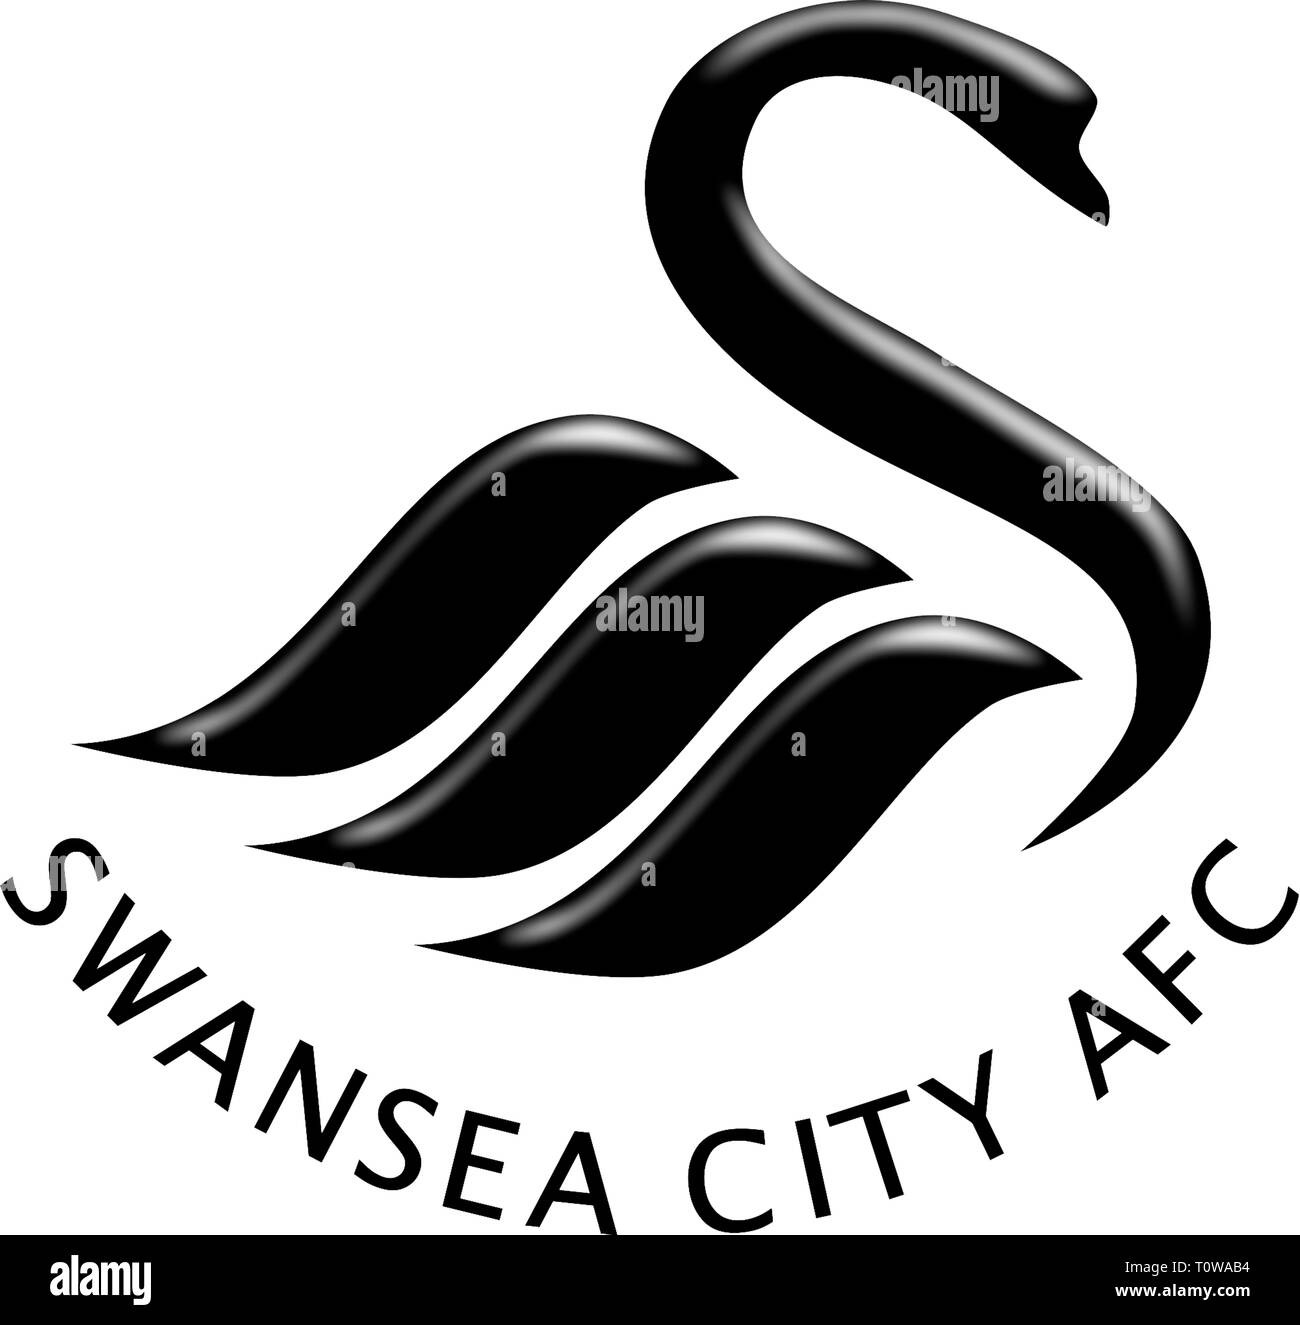 Logo of Welsh football team Swansea City Association Football Club - United Kingdom. Stock Photo